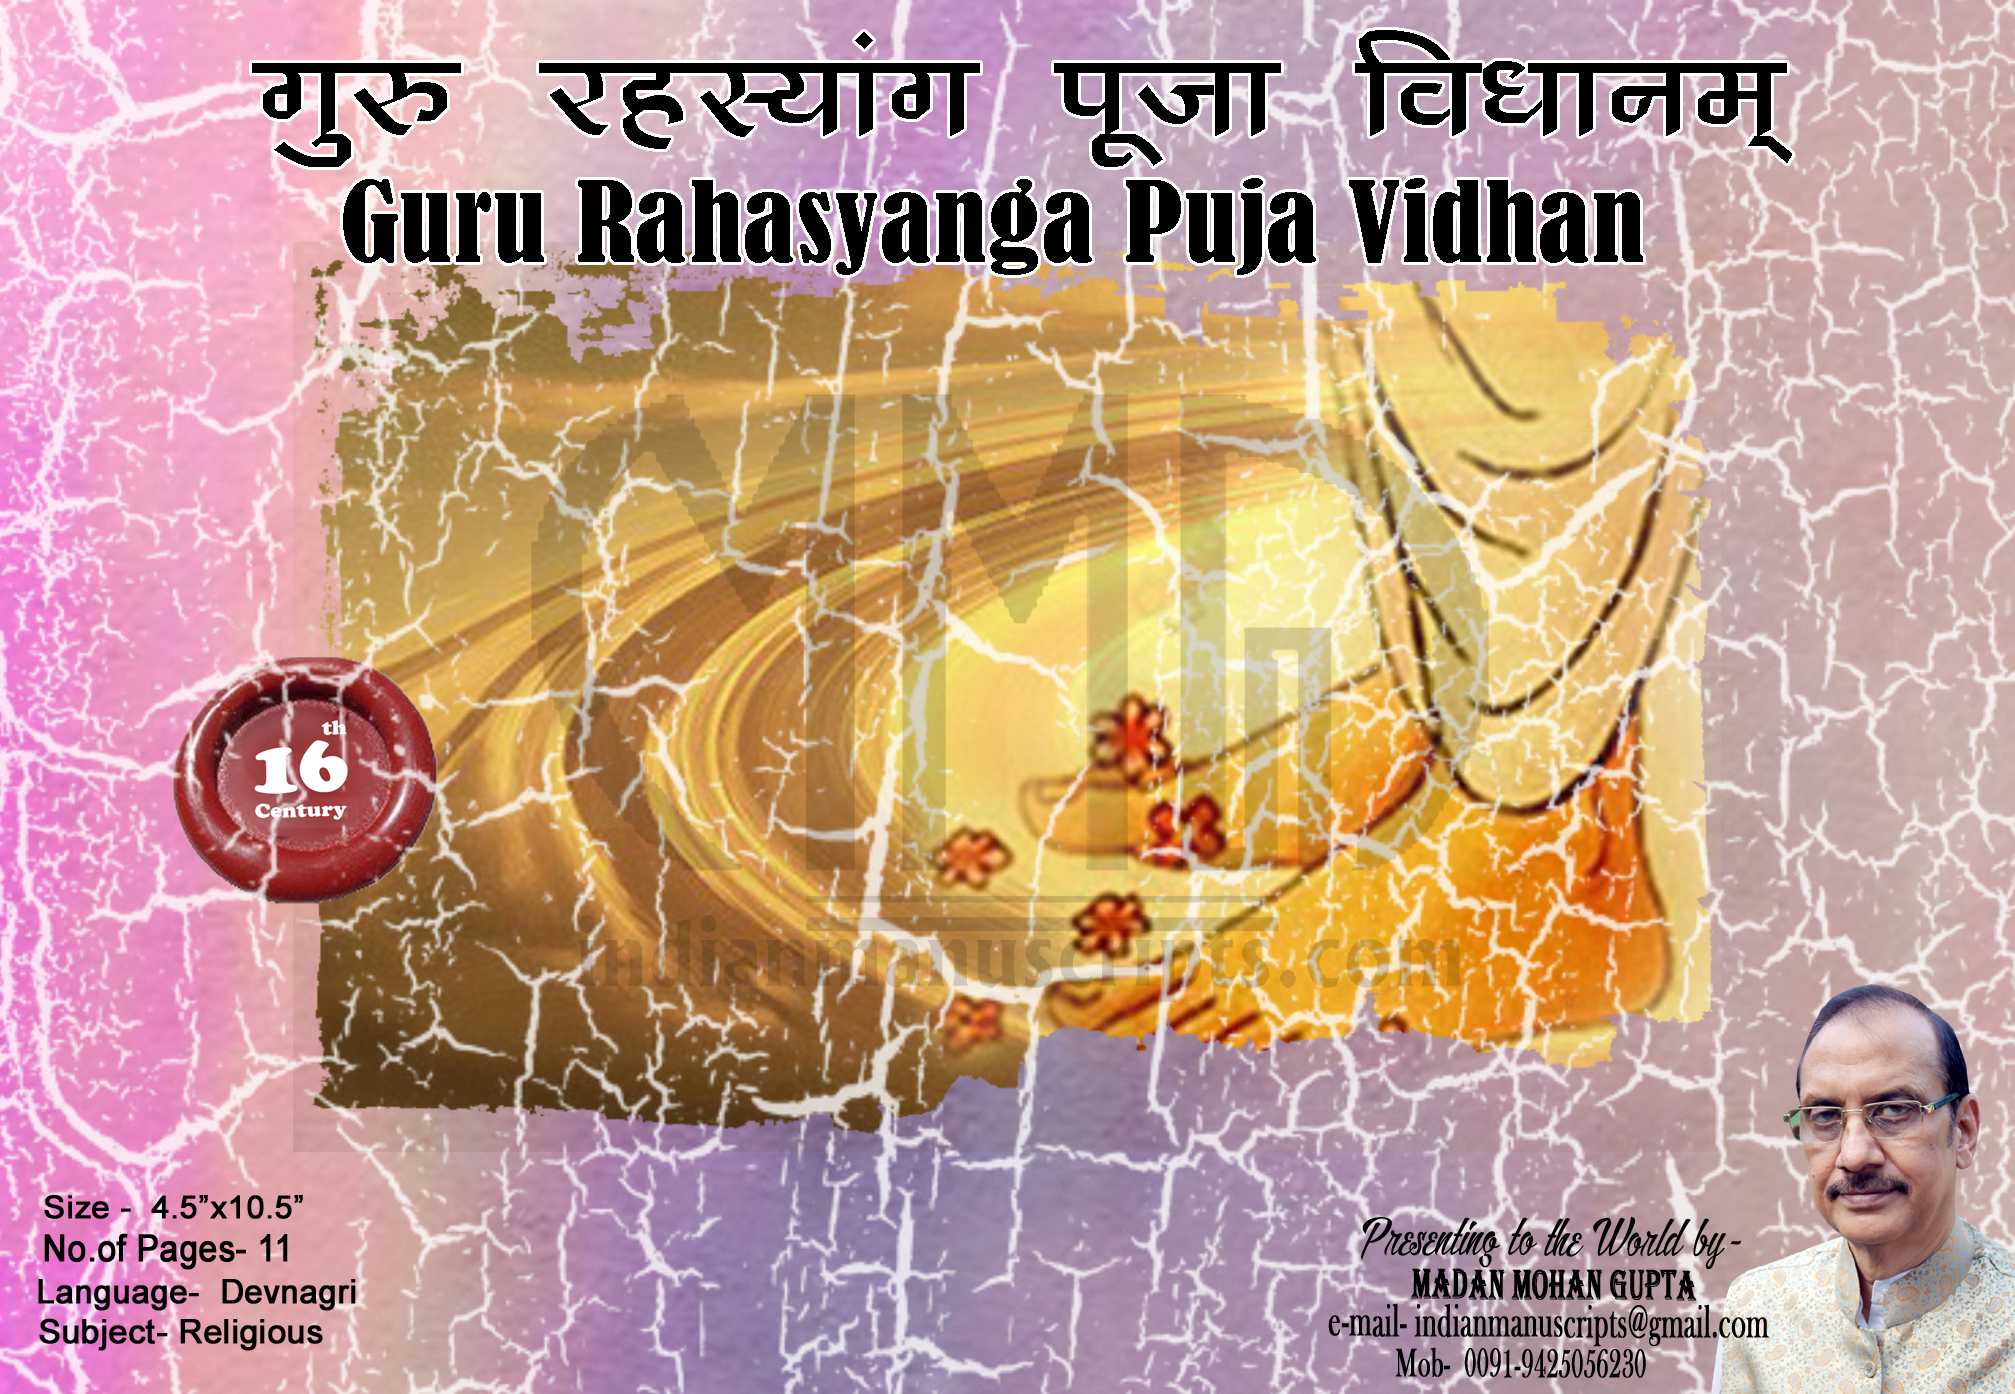 Guru Rahasyanga Puja Vidhan